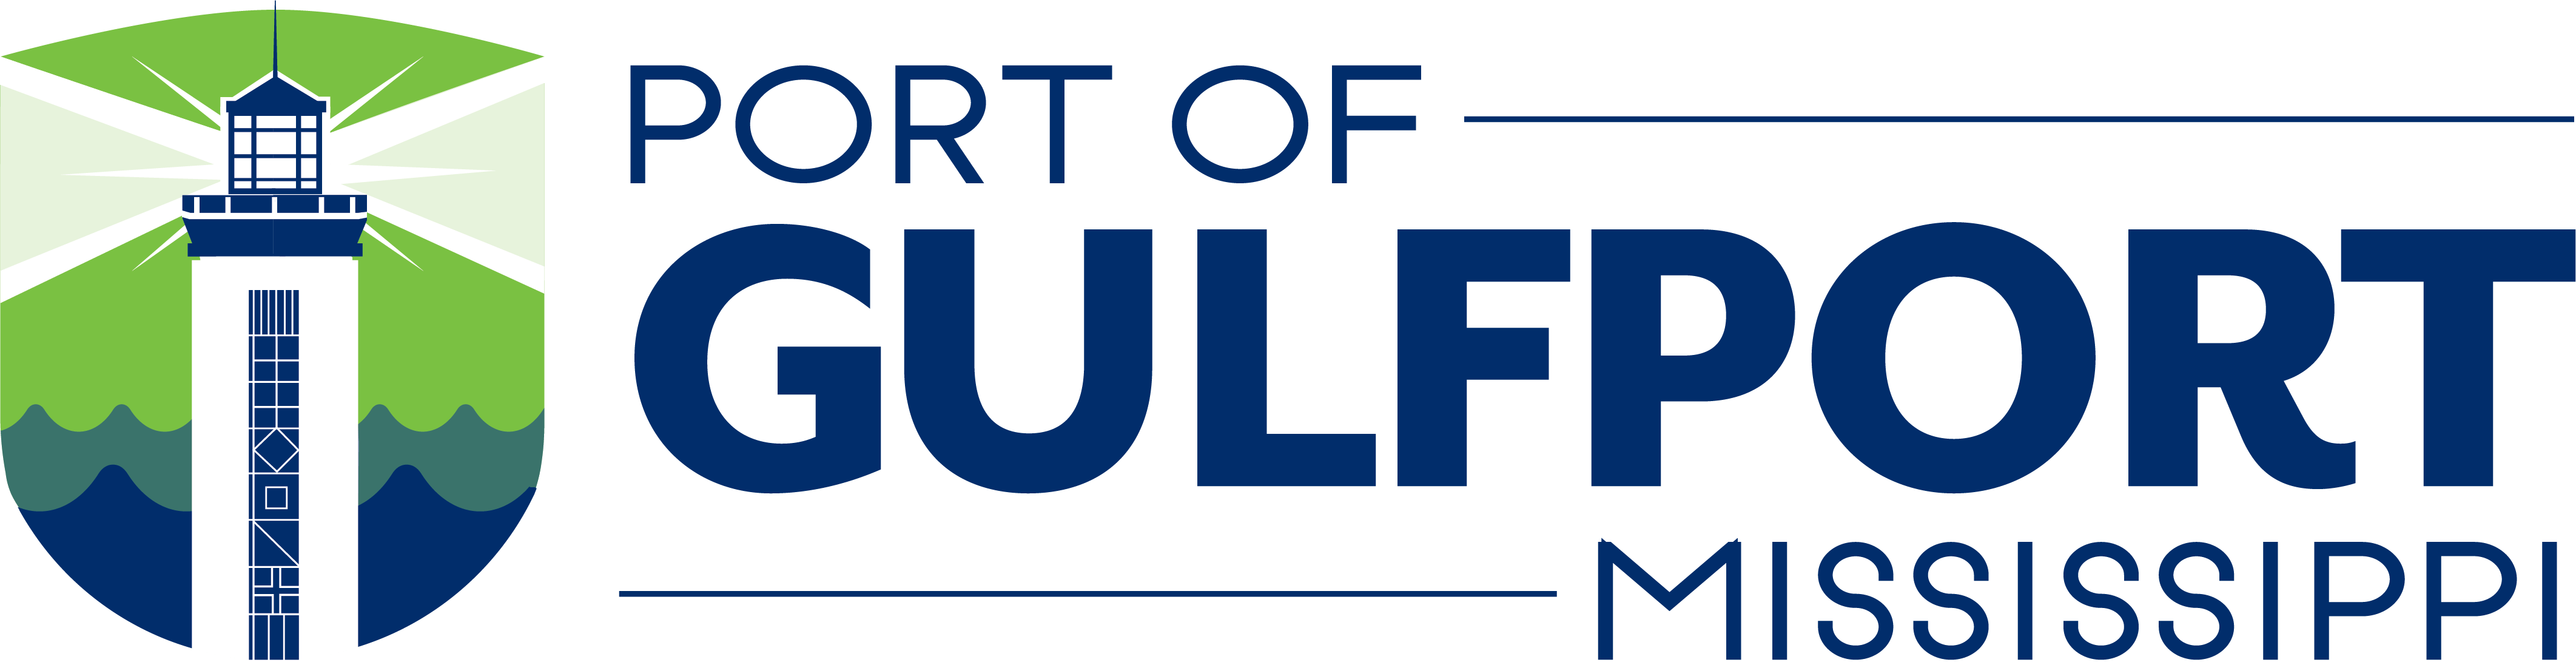 Mississippi Logo - Port of Gulfport Logos | Port of Gulfport, Mississippi